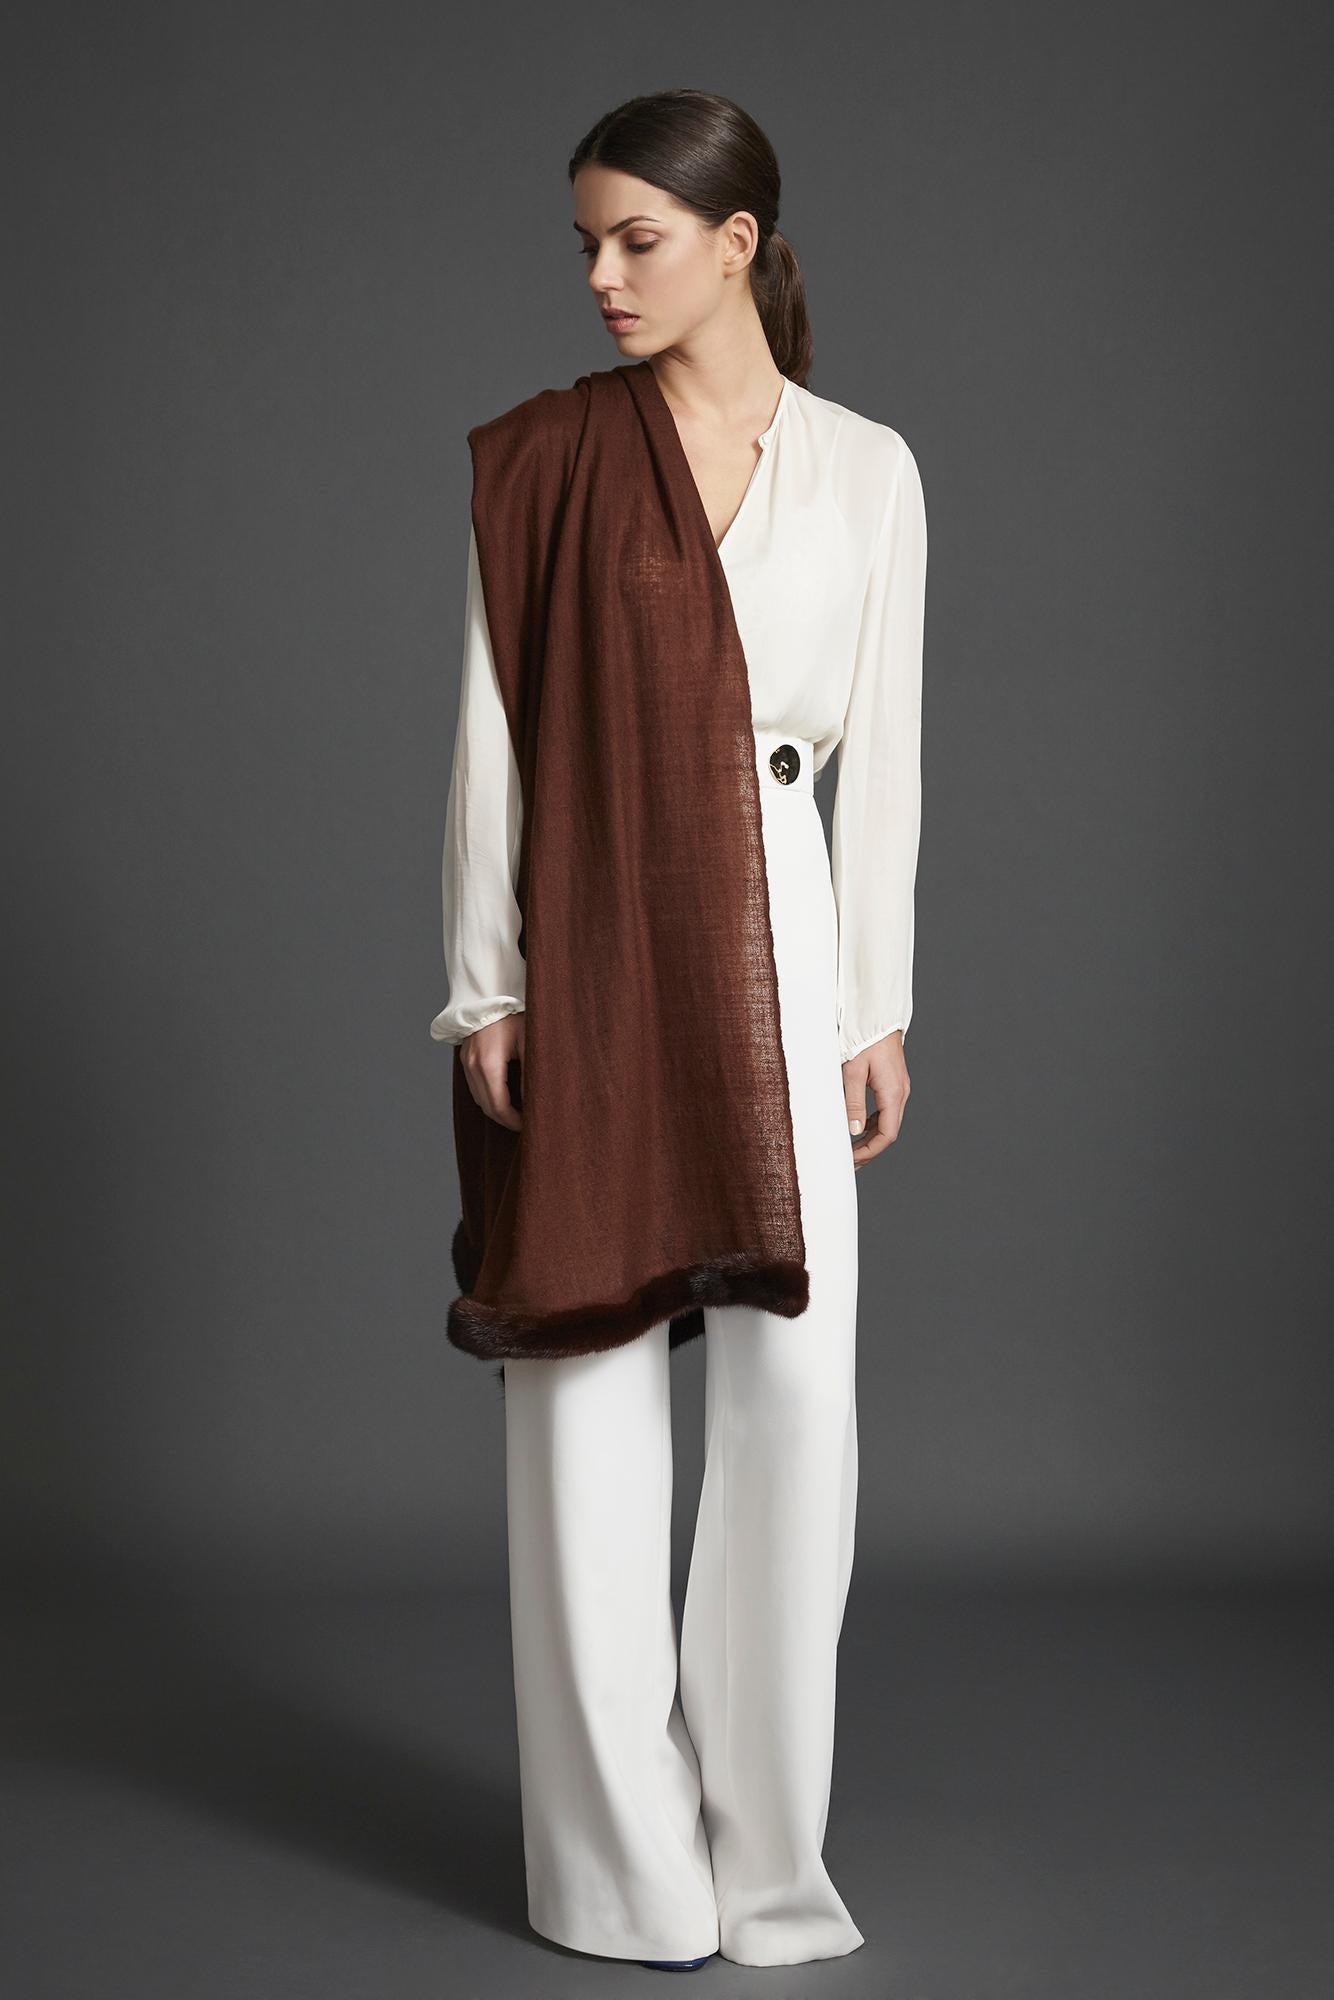 Women's or Men's Verheyen London Handwoven Mink Fur Trimmed Cashmere Scarf in Brown - Brand New